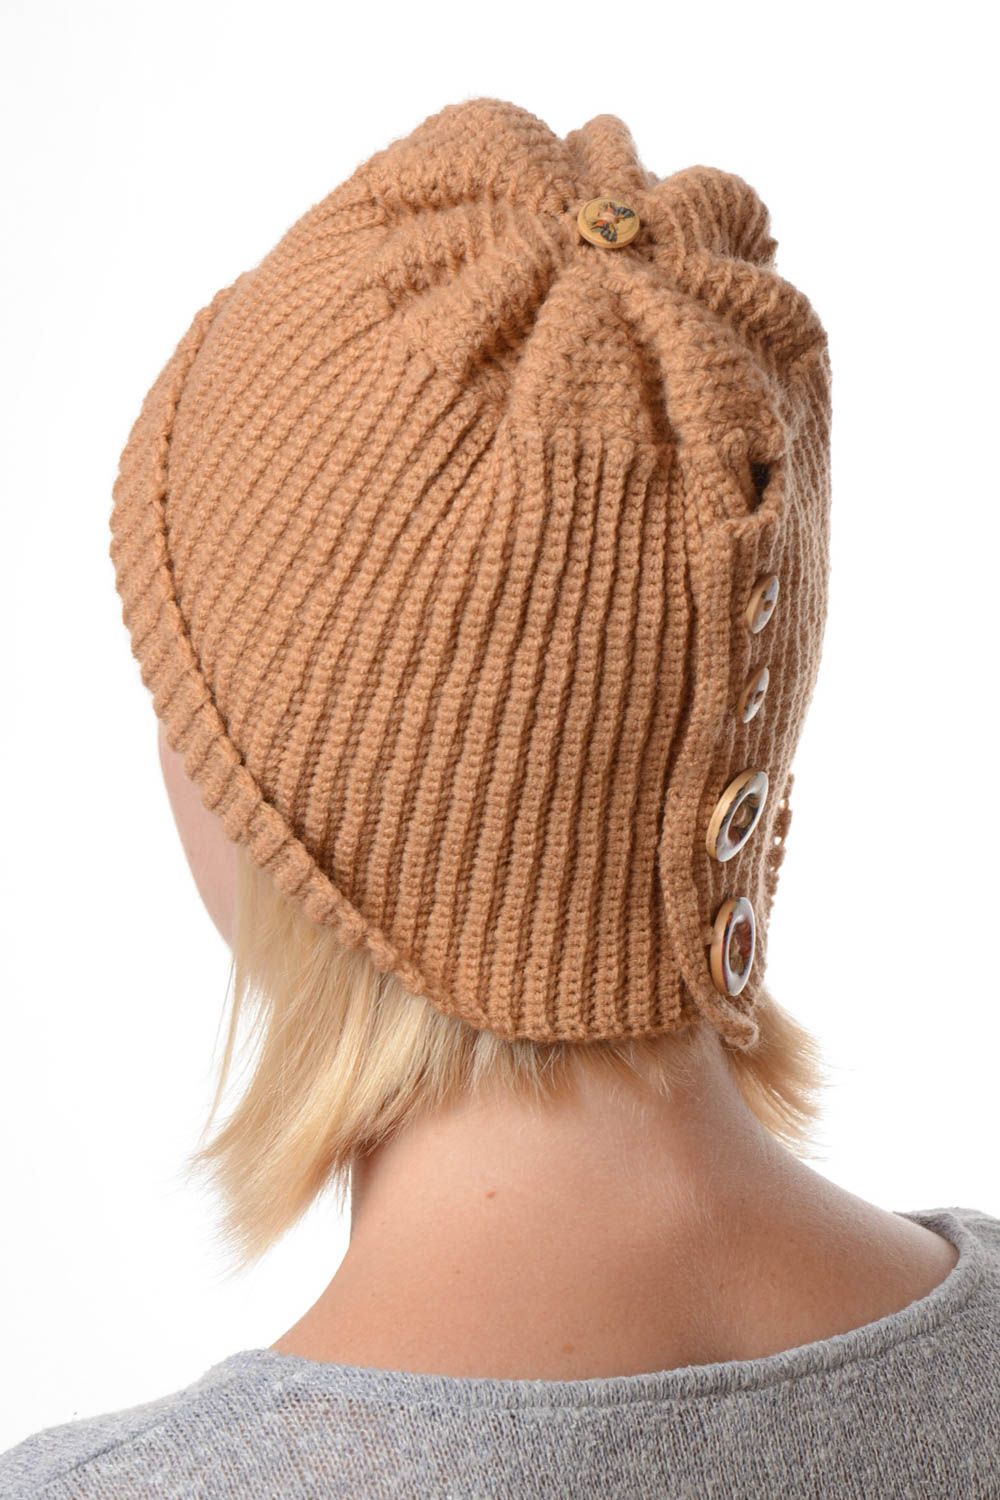 Beanie hat for women handmade crochet hat winter hats for women gifts for her photo 2